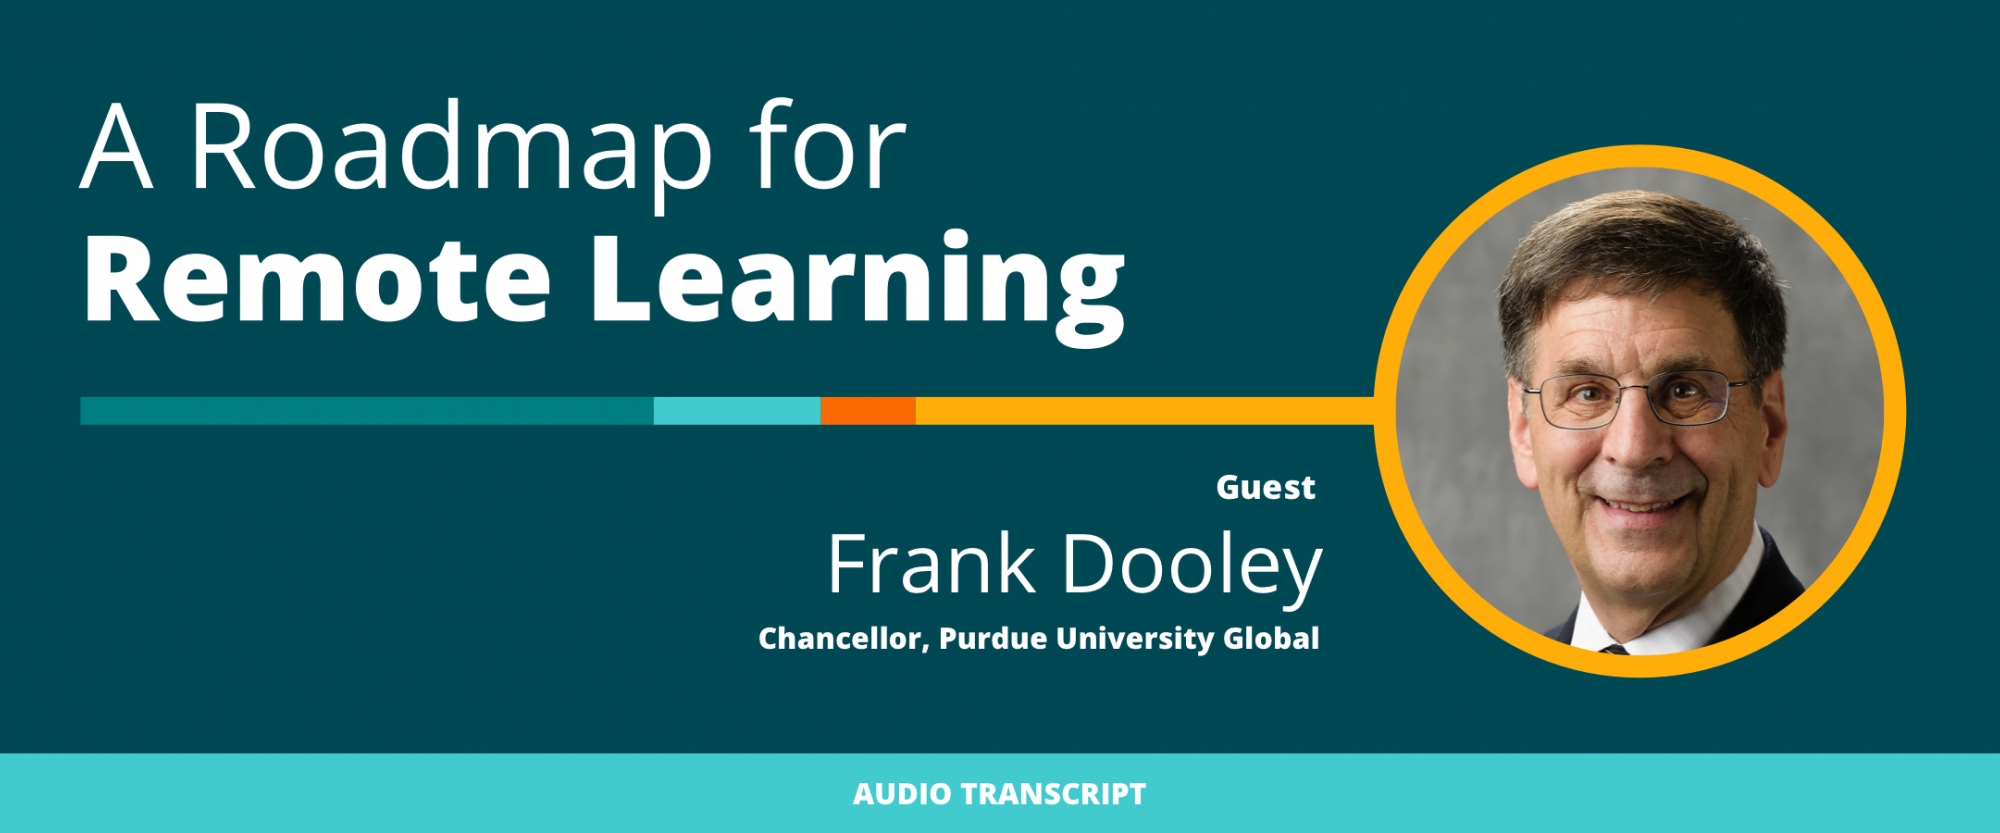 Weekly Wisdom 12/7/20 Episode: Transcript of Conversation With Frank Dooley, Chancellor, Purdue University Global